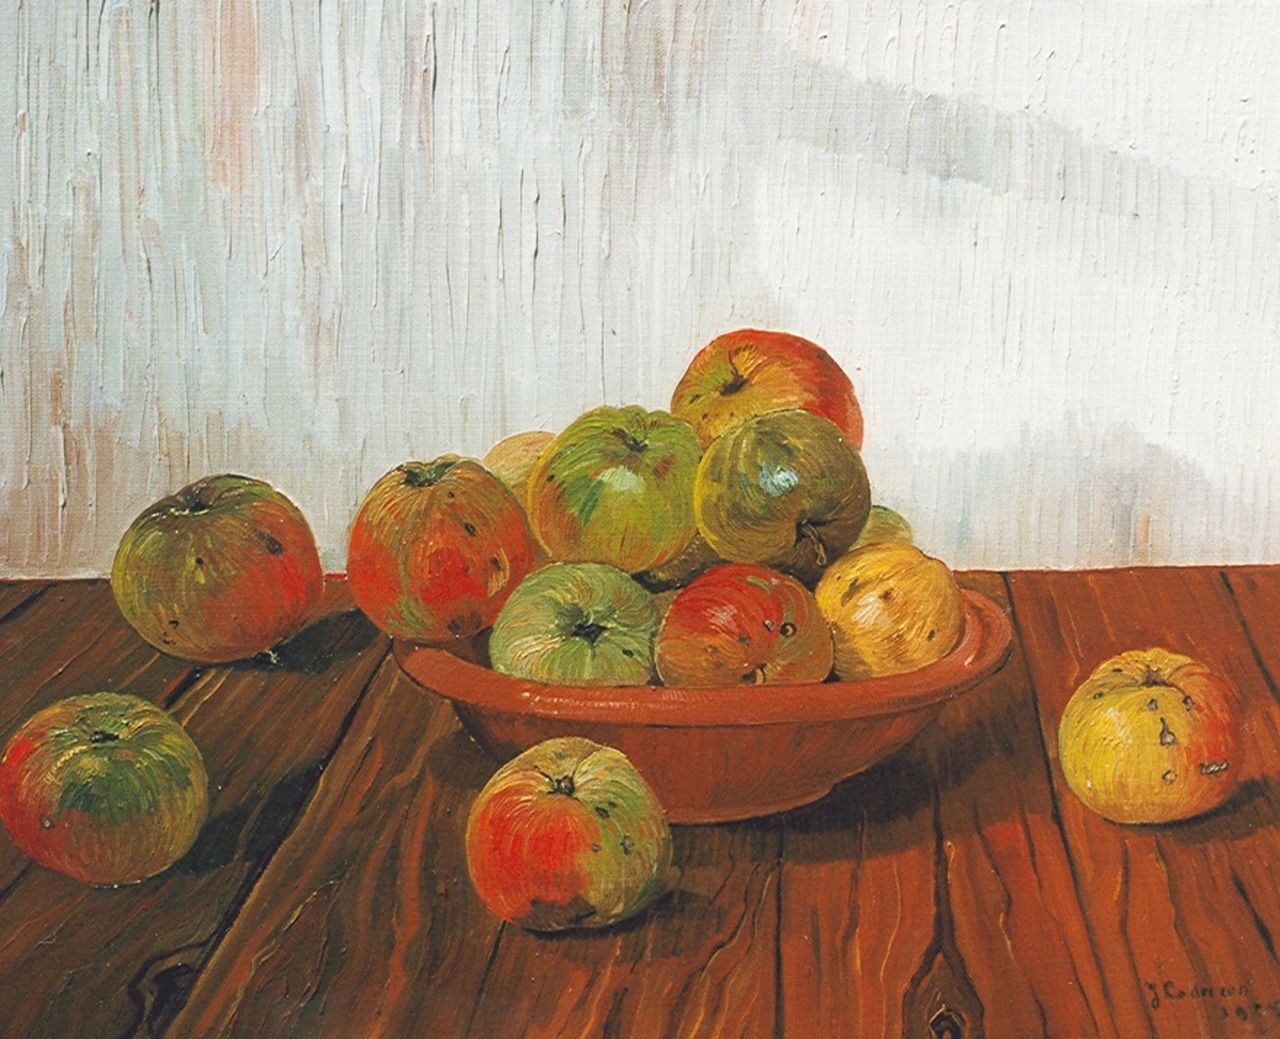 Lodeizen J.  | Johannes 'Jo' Lodeizen, Still life with apples on an oak table, Öl auf Leinwand 40,0 x 50,3 cm, signed l.r. und dated 1925